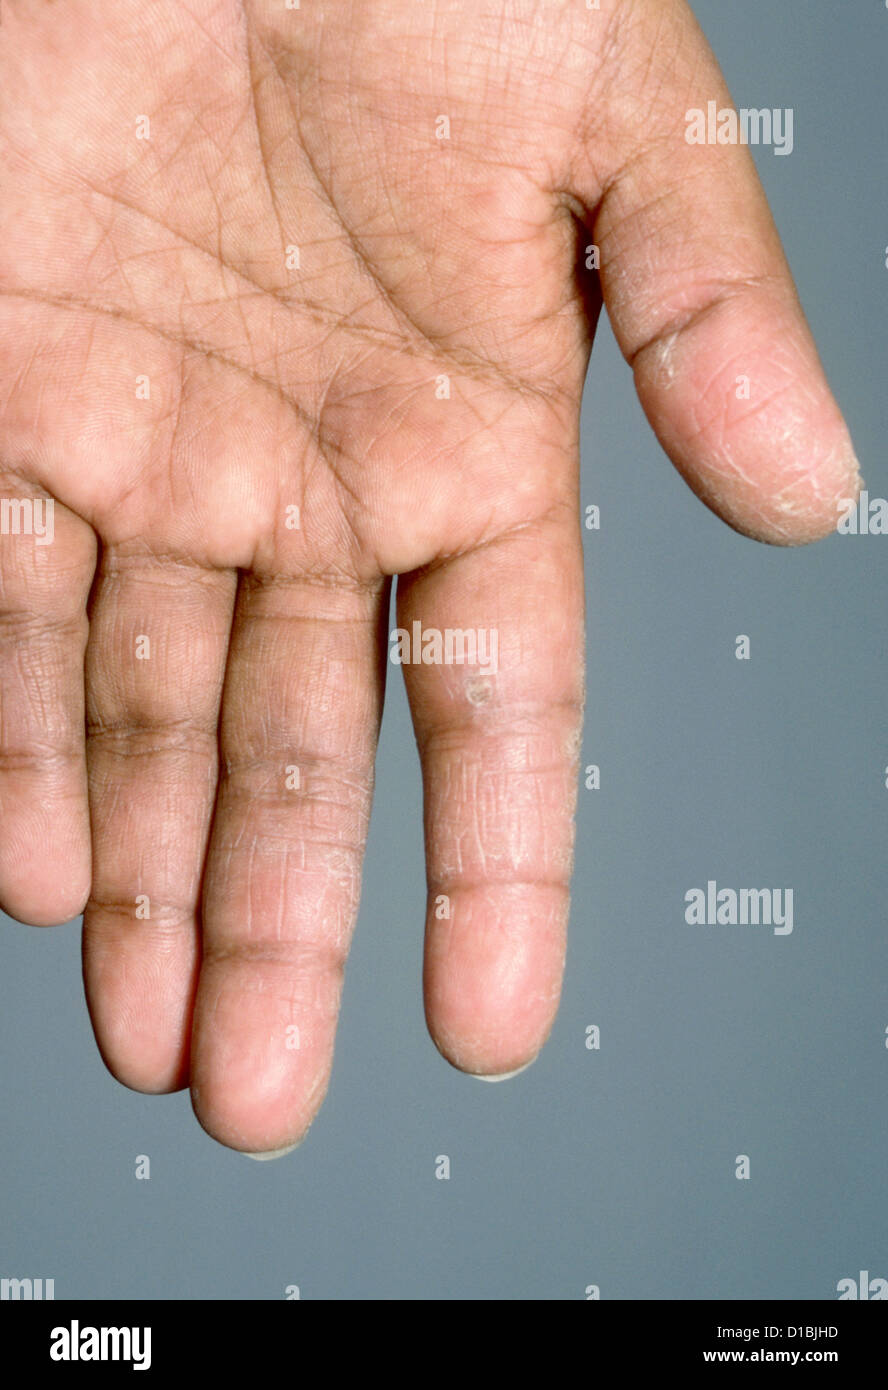 HYPERKERATOSIS OF HANDS Stock Photo